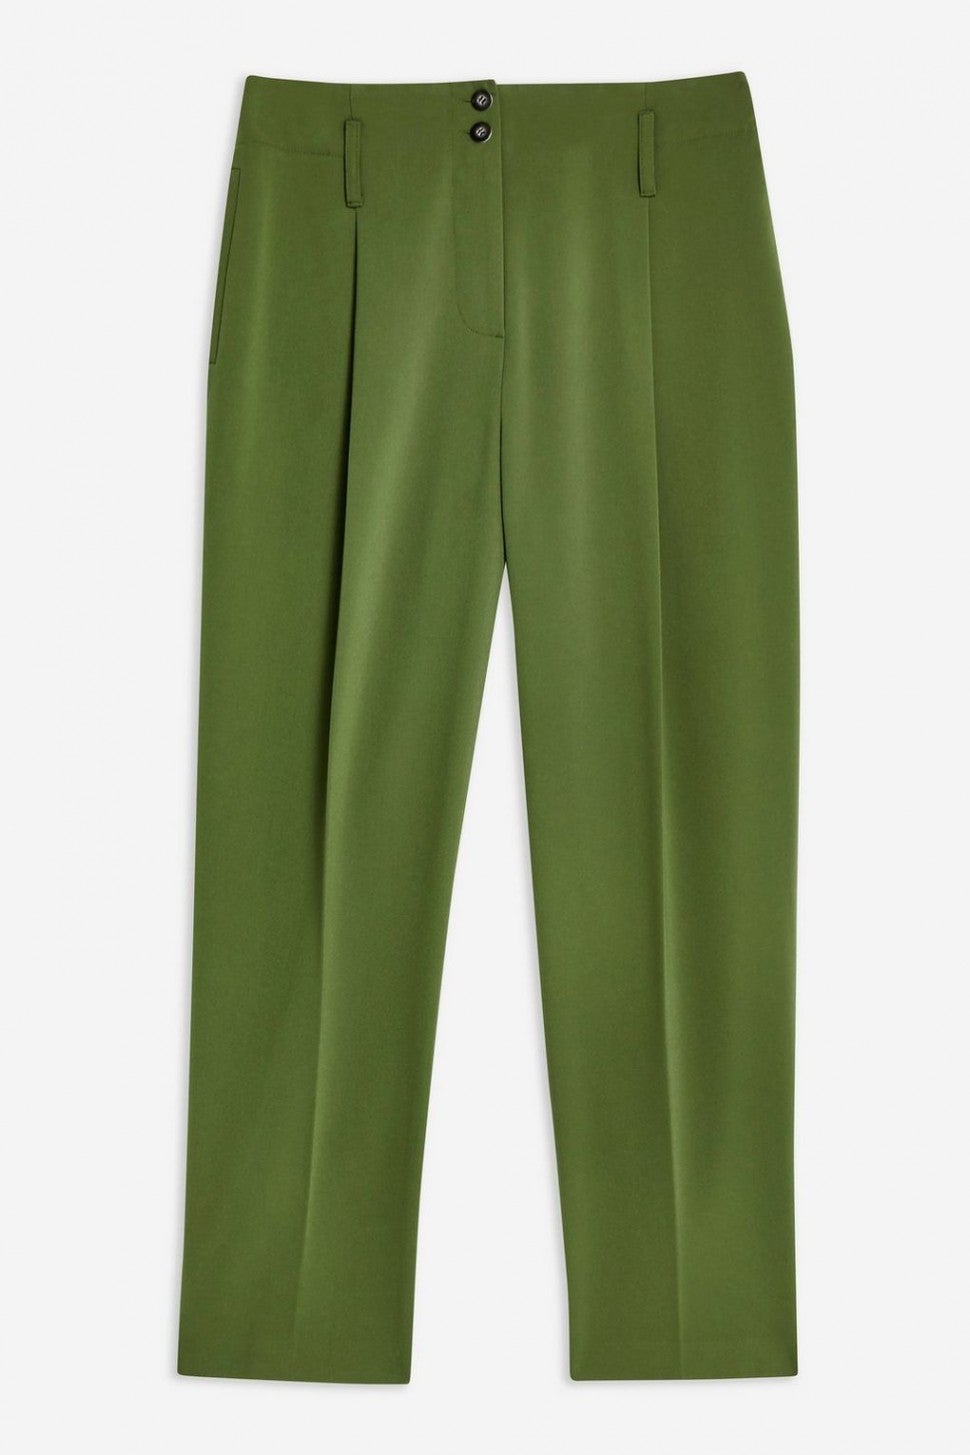 Topshop green pant